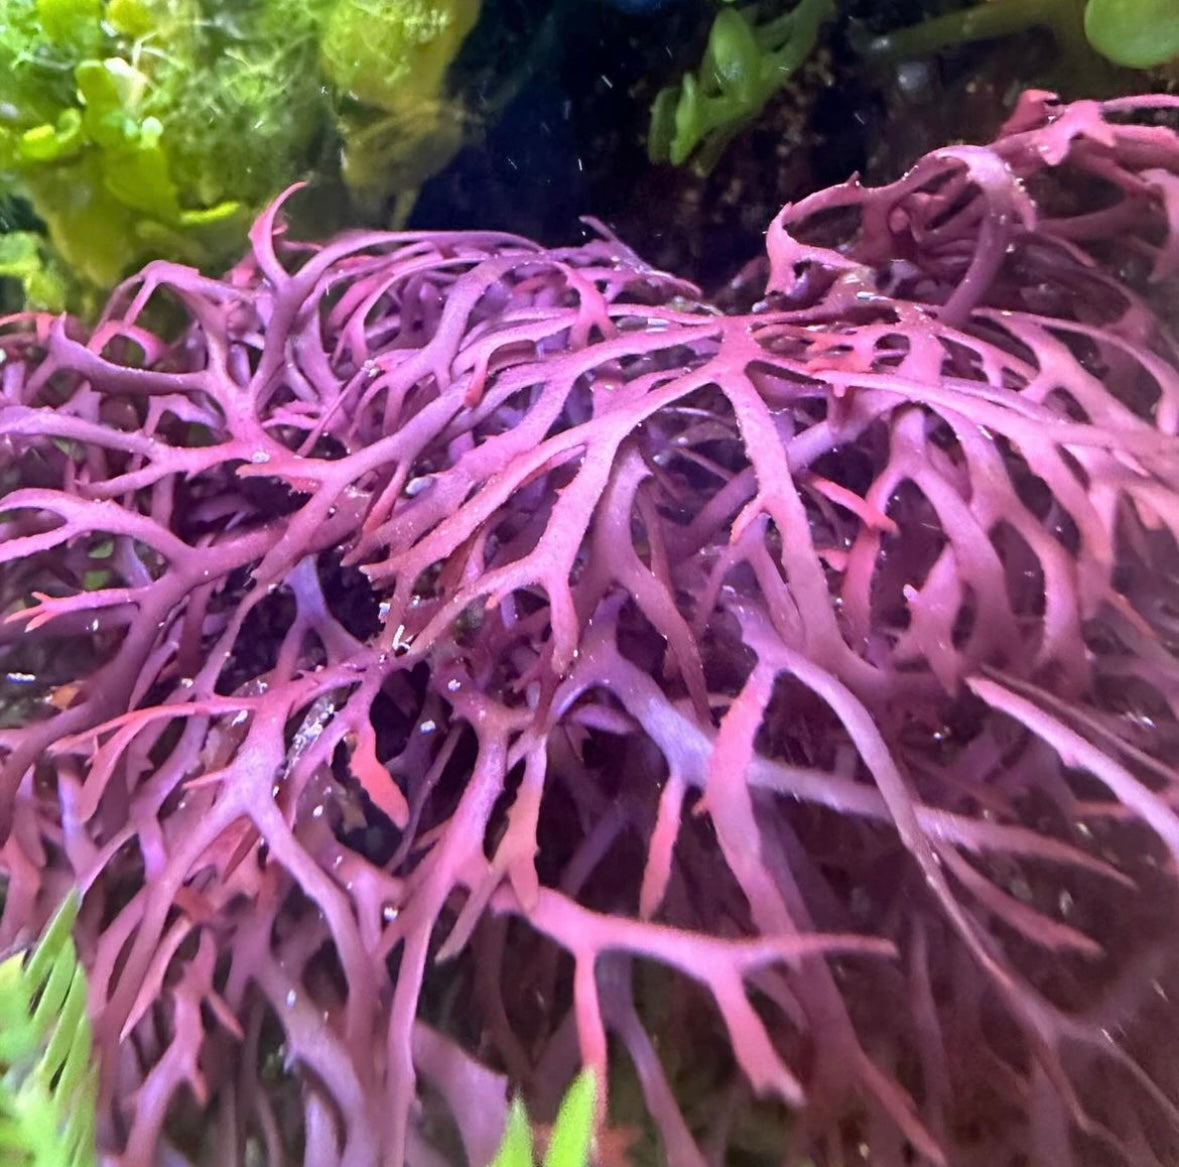 Purple Flat-Branching Algae | Gracilaria sp.